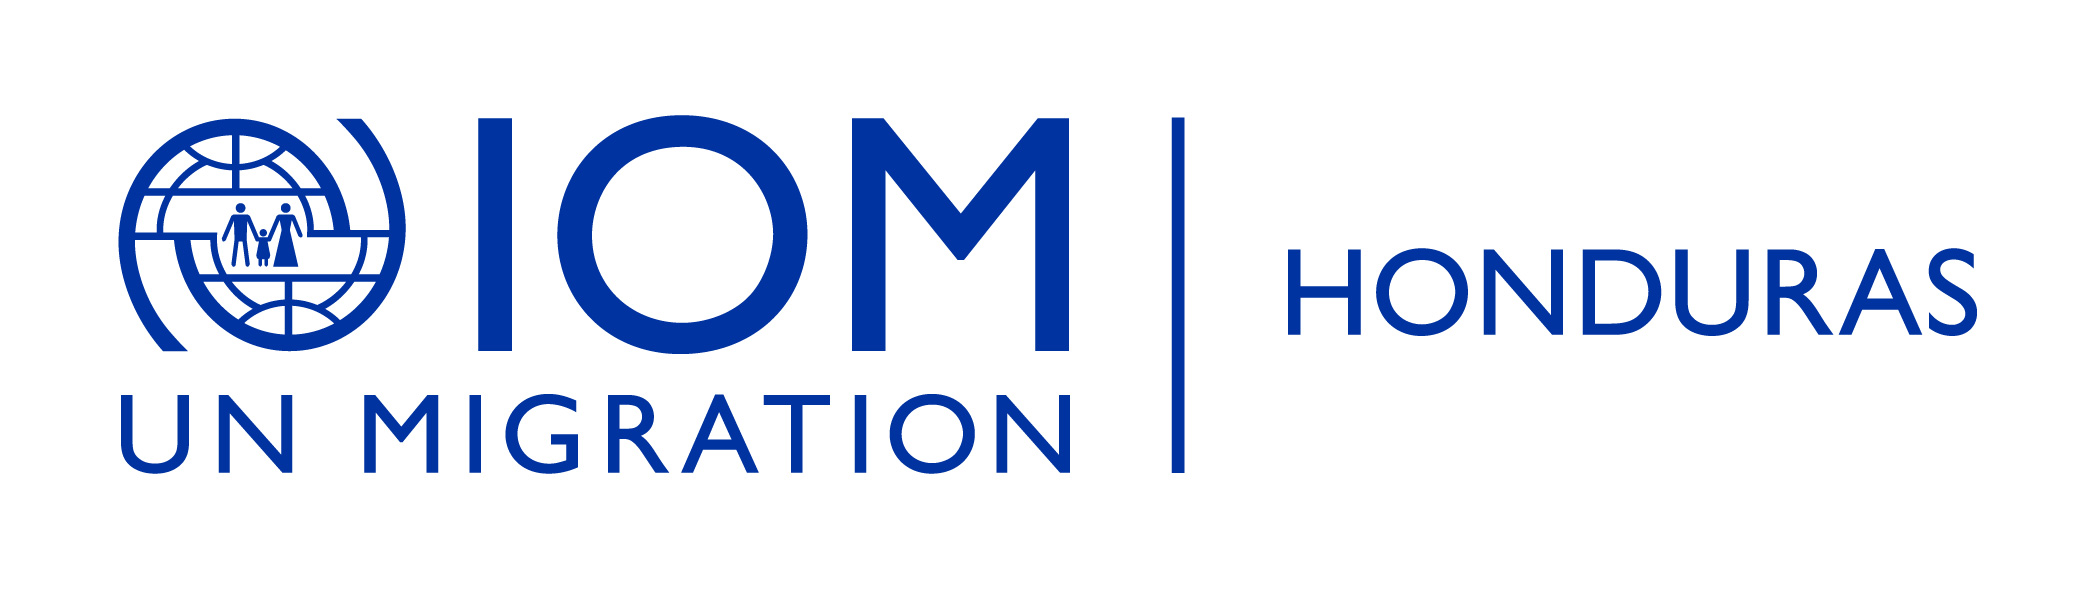 IOM Honduras logo